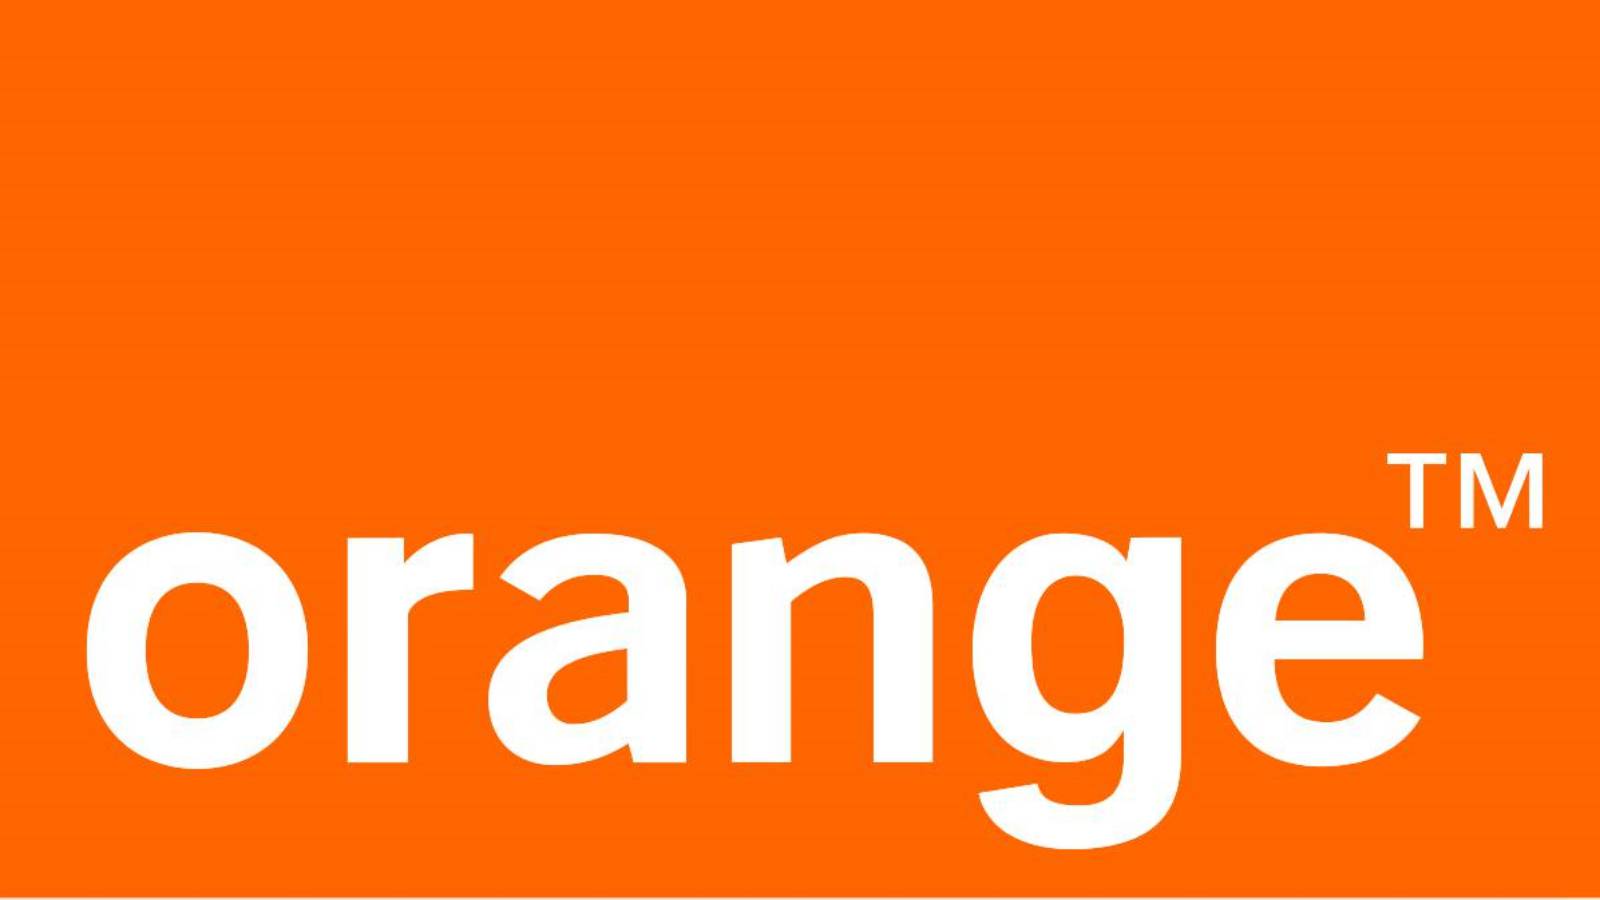 Orangener Atlas